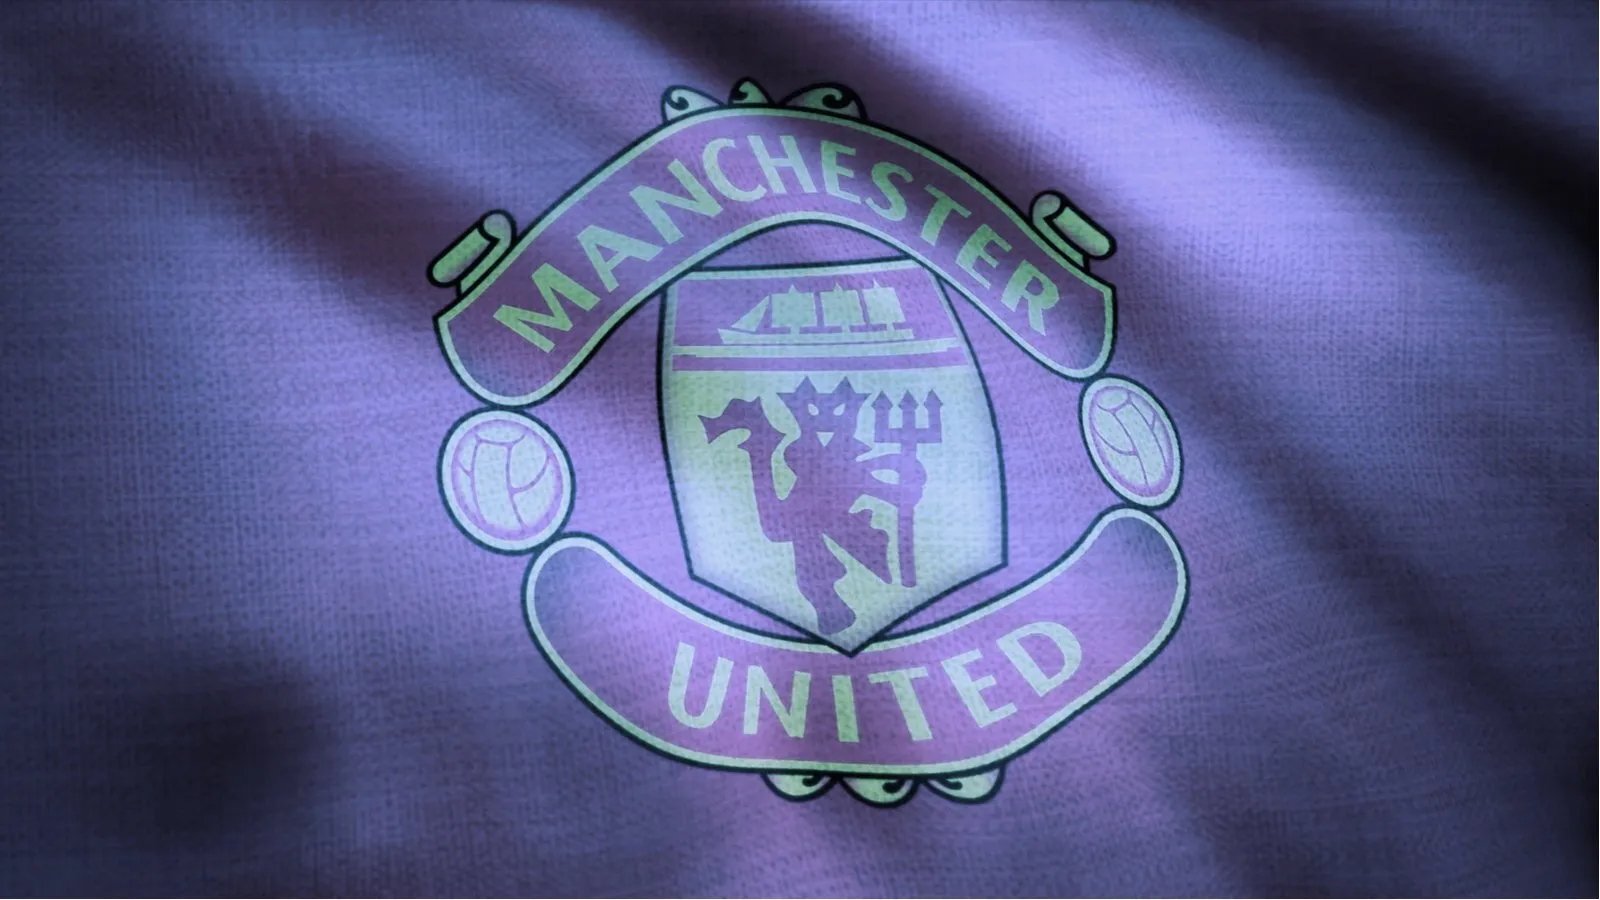 El Manchester United es un equipo de fútbol de Inglaterra. Imagen: Shutterstock